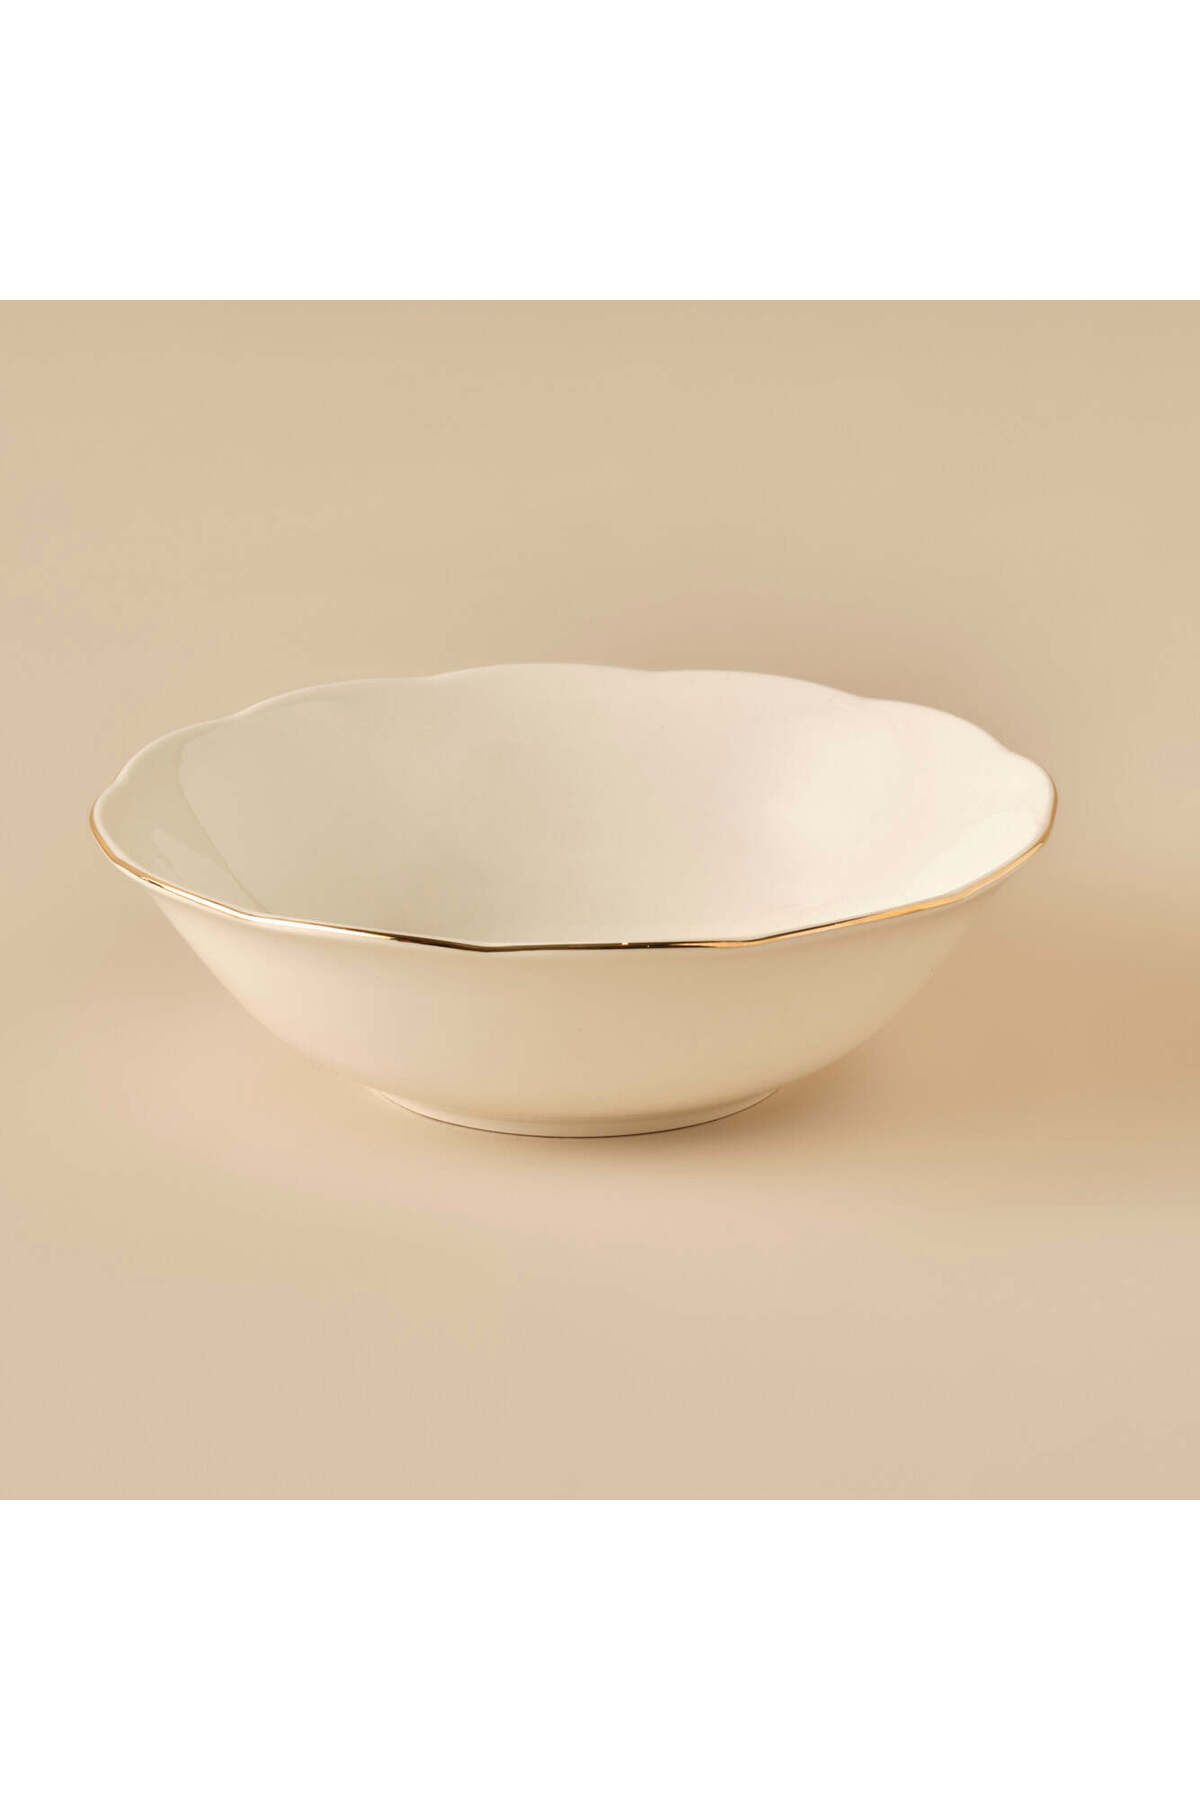 Bella Maison Clover Porselen Salata Kasesi Gold (25 cm)